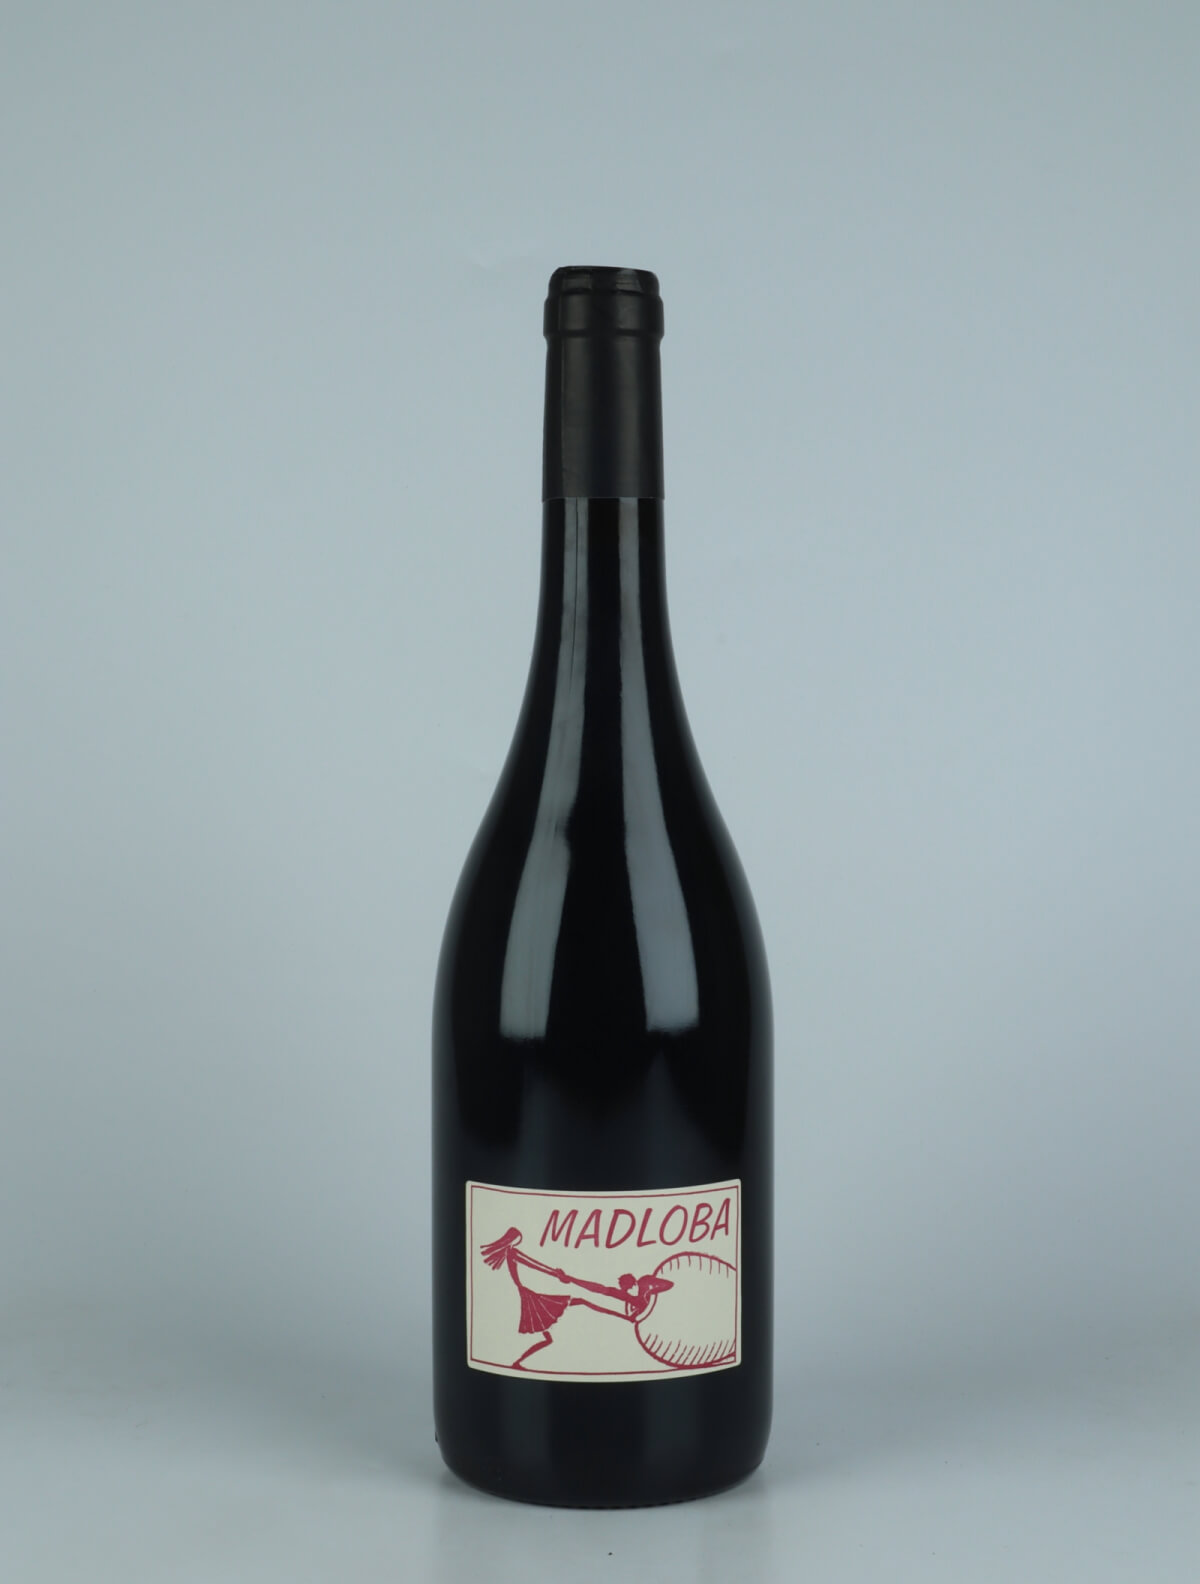 A bottle 2022 Saint-Joseph Madloba Red wine from Domaine des Miquettes, Rhône in France